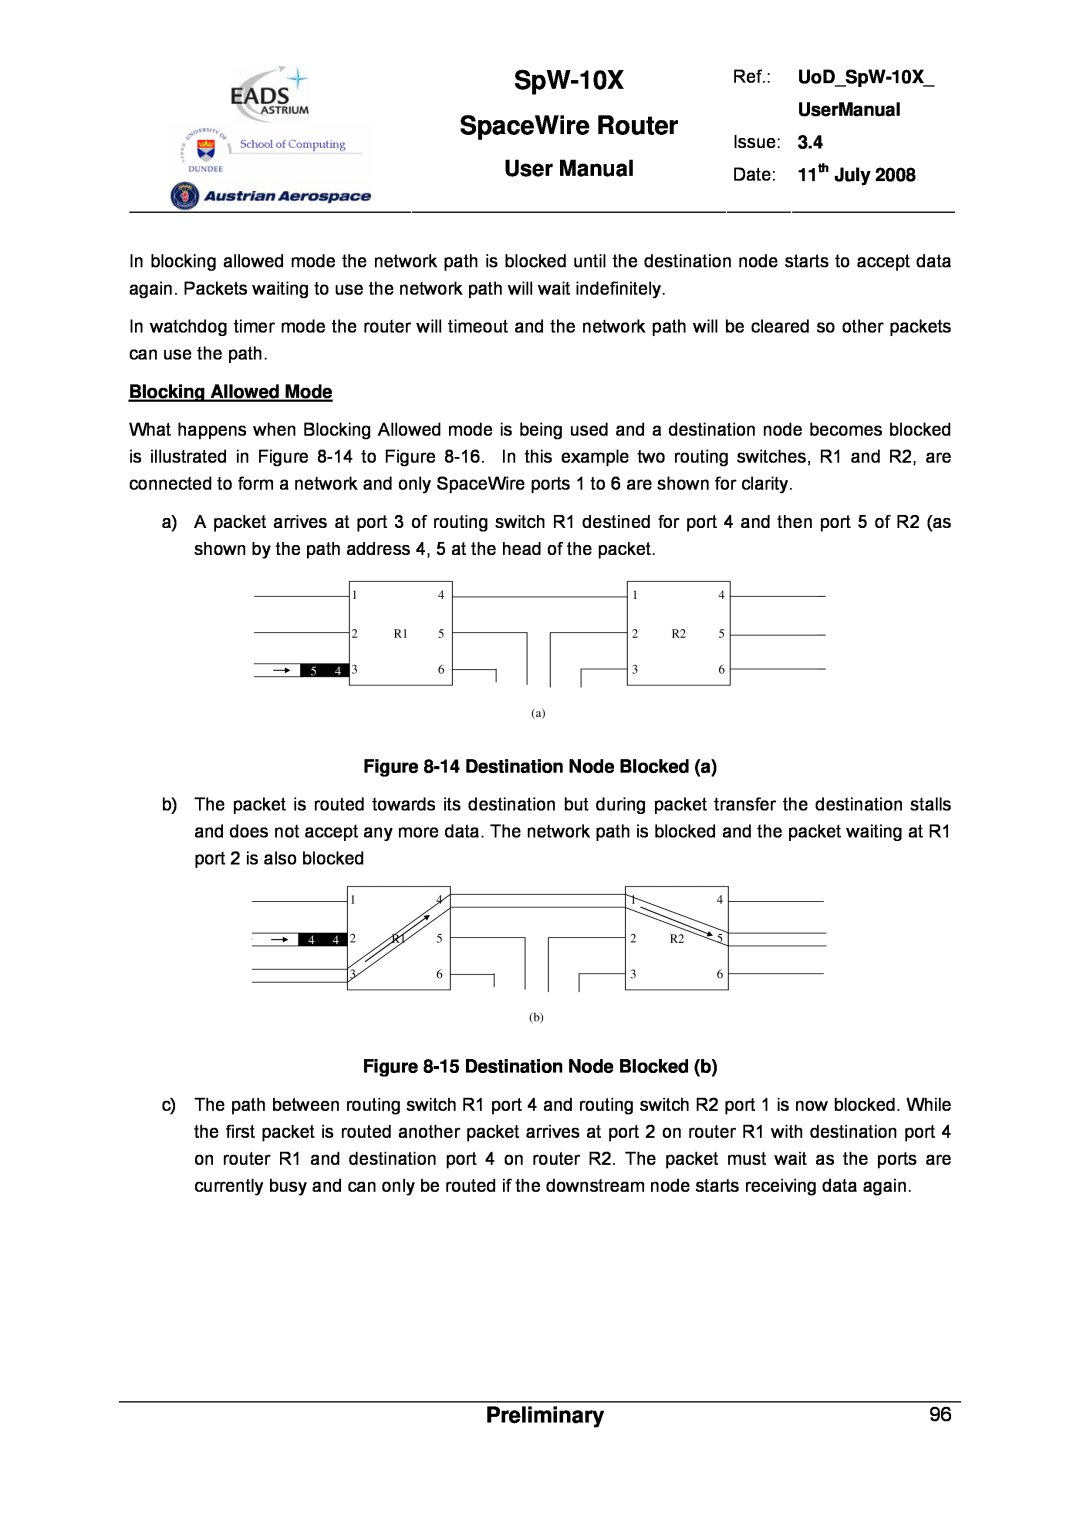 Atmel SpW-10X user manual SpaceWire Router, User Manual, Preliminary 